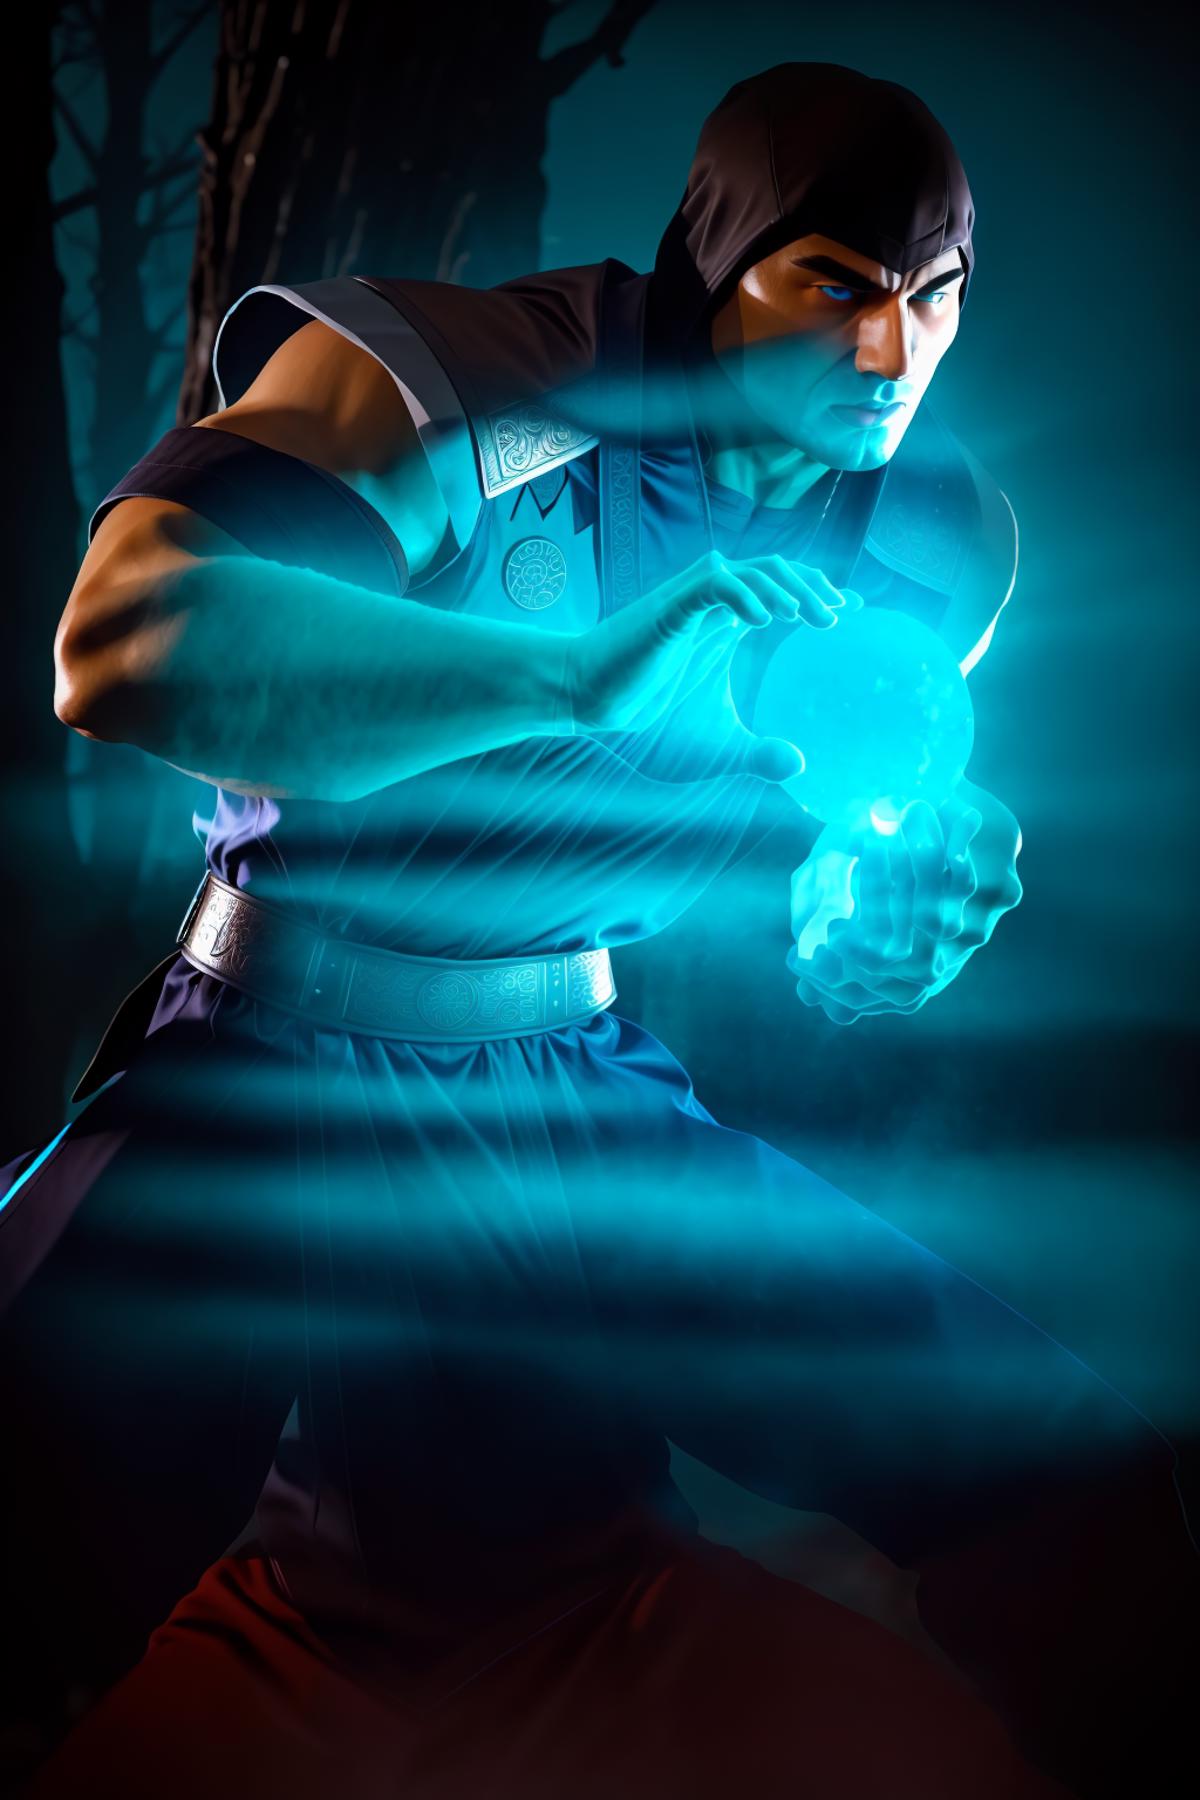 Sub-Zero (Mortal Kombat) image by DeViLDoNia